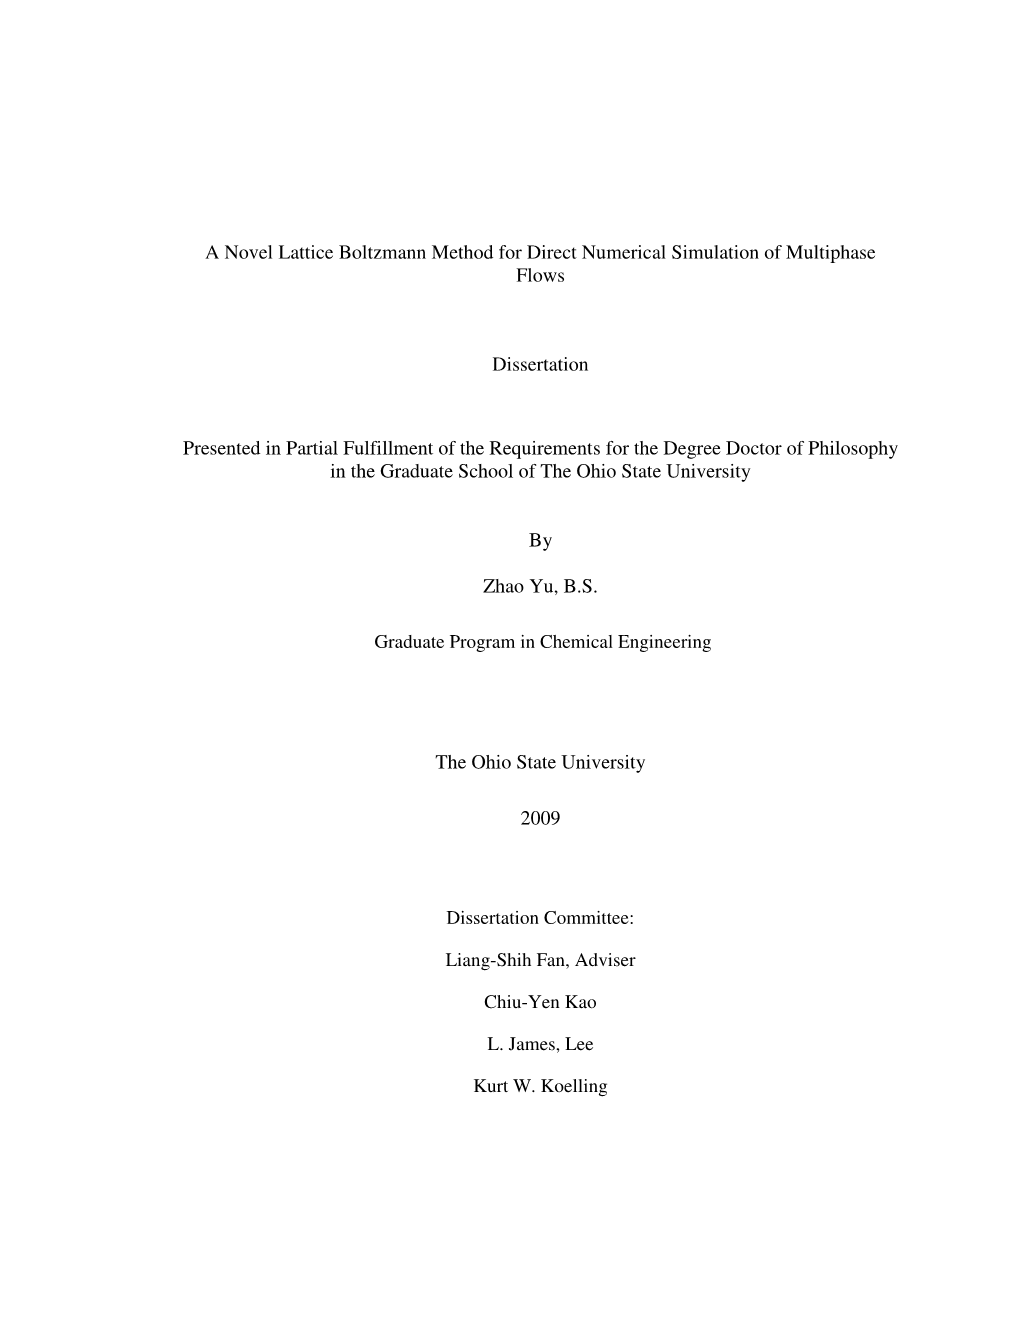 A Novel Lattice Boltzmann Method for Direct Numerical Simulation of Multiphase Flows